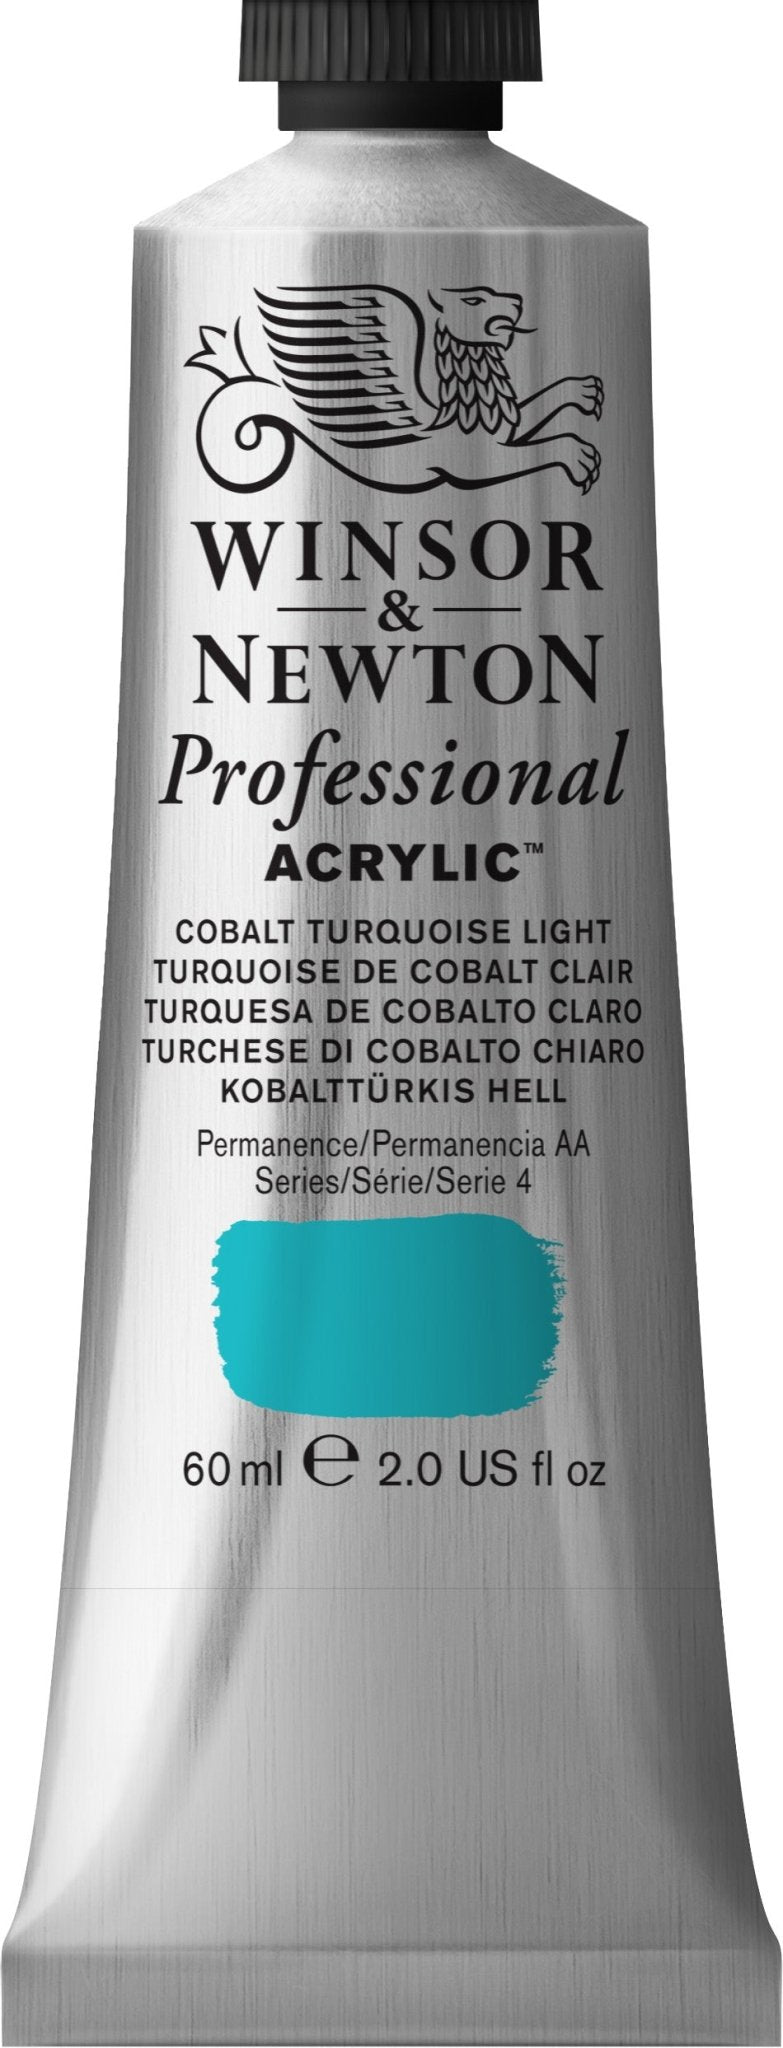 W & N Professional Acrylic 60ml Cobalt Turquoise Light - theartshop.com.au